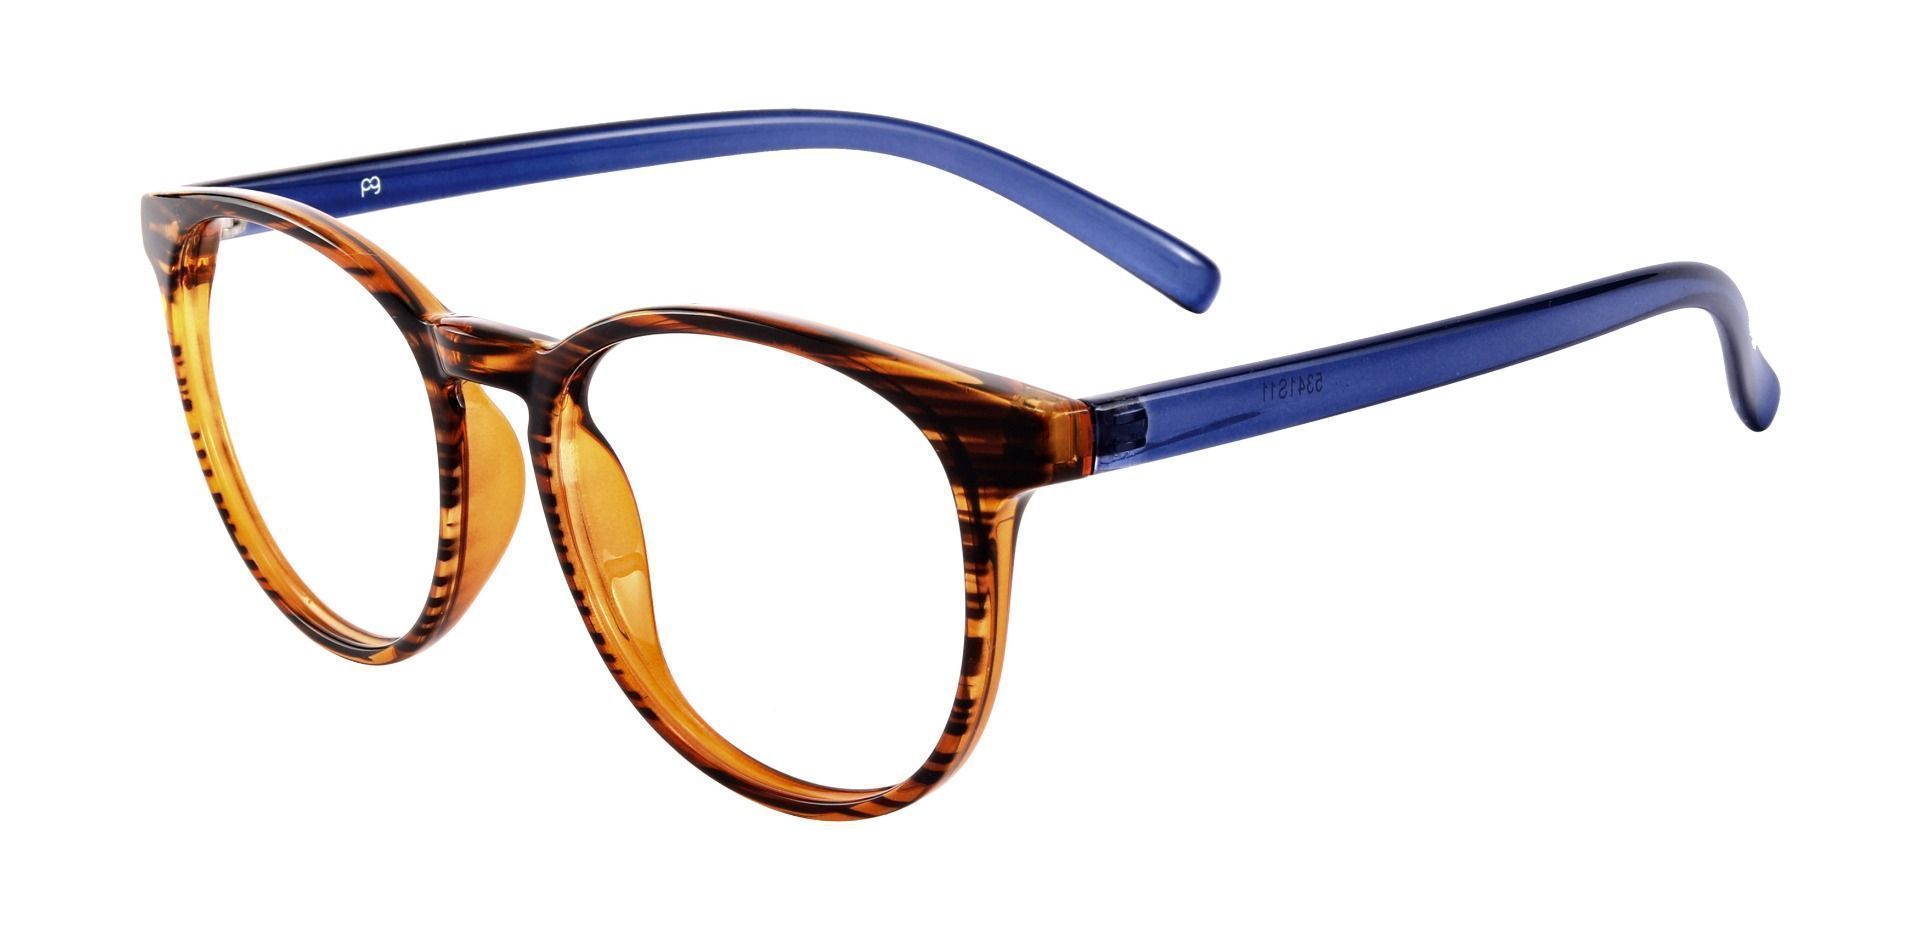 Corbett Oval Progressive Glasses - Striped